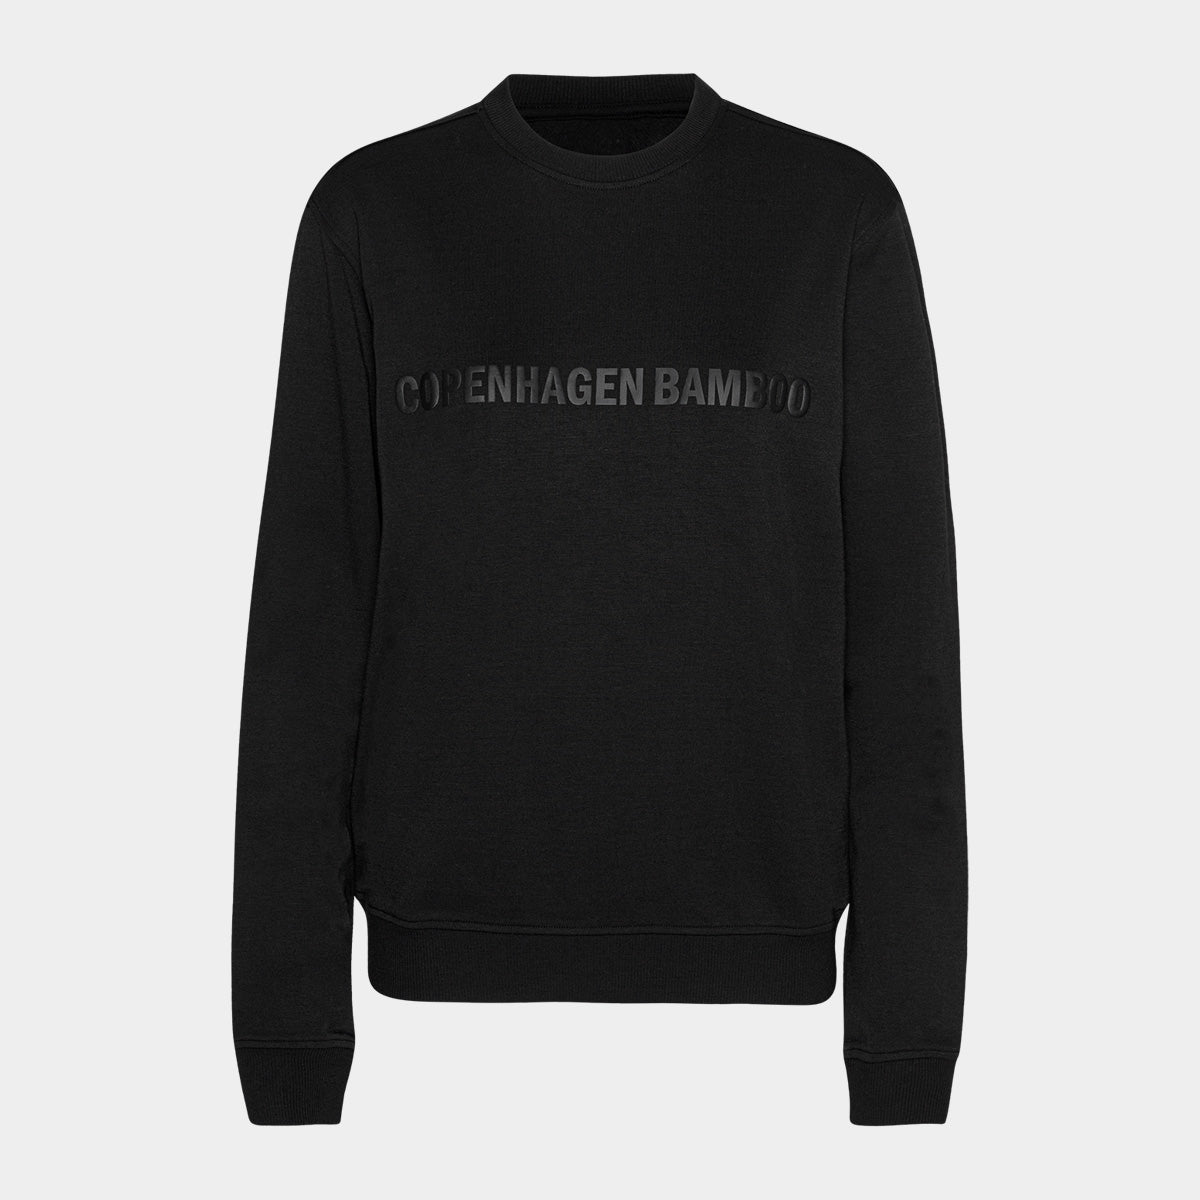 Se Sort bambus sweatshirt til mænd med logo fra Copenhagen Bamboo, XS hos Bambustøj.dk